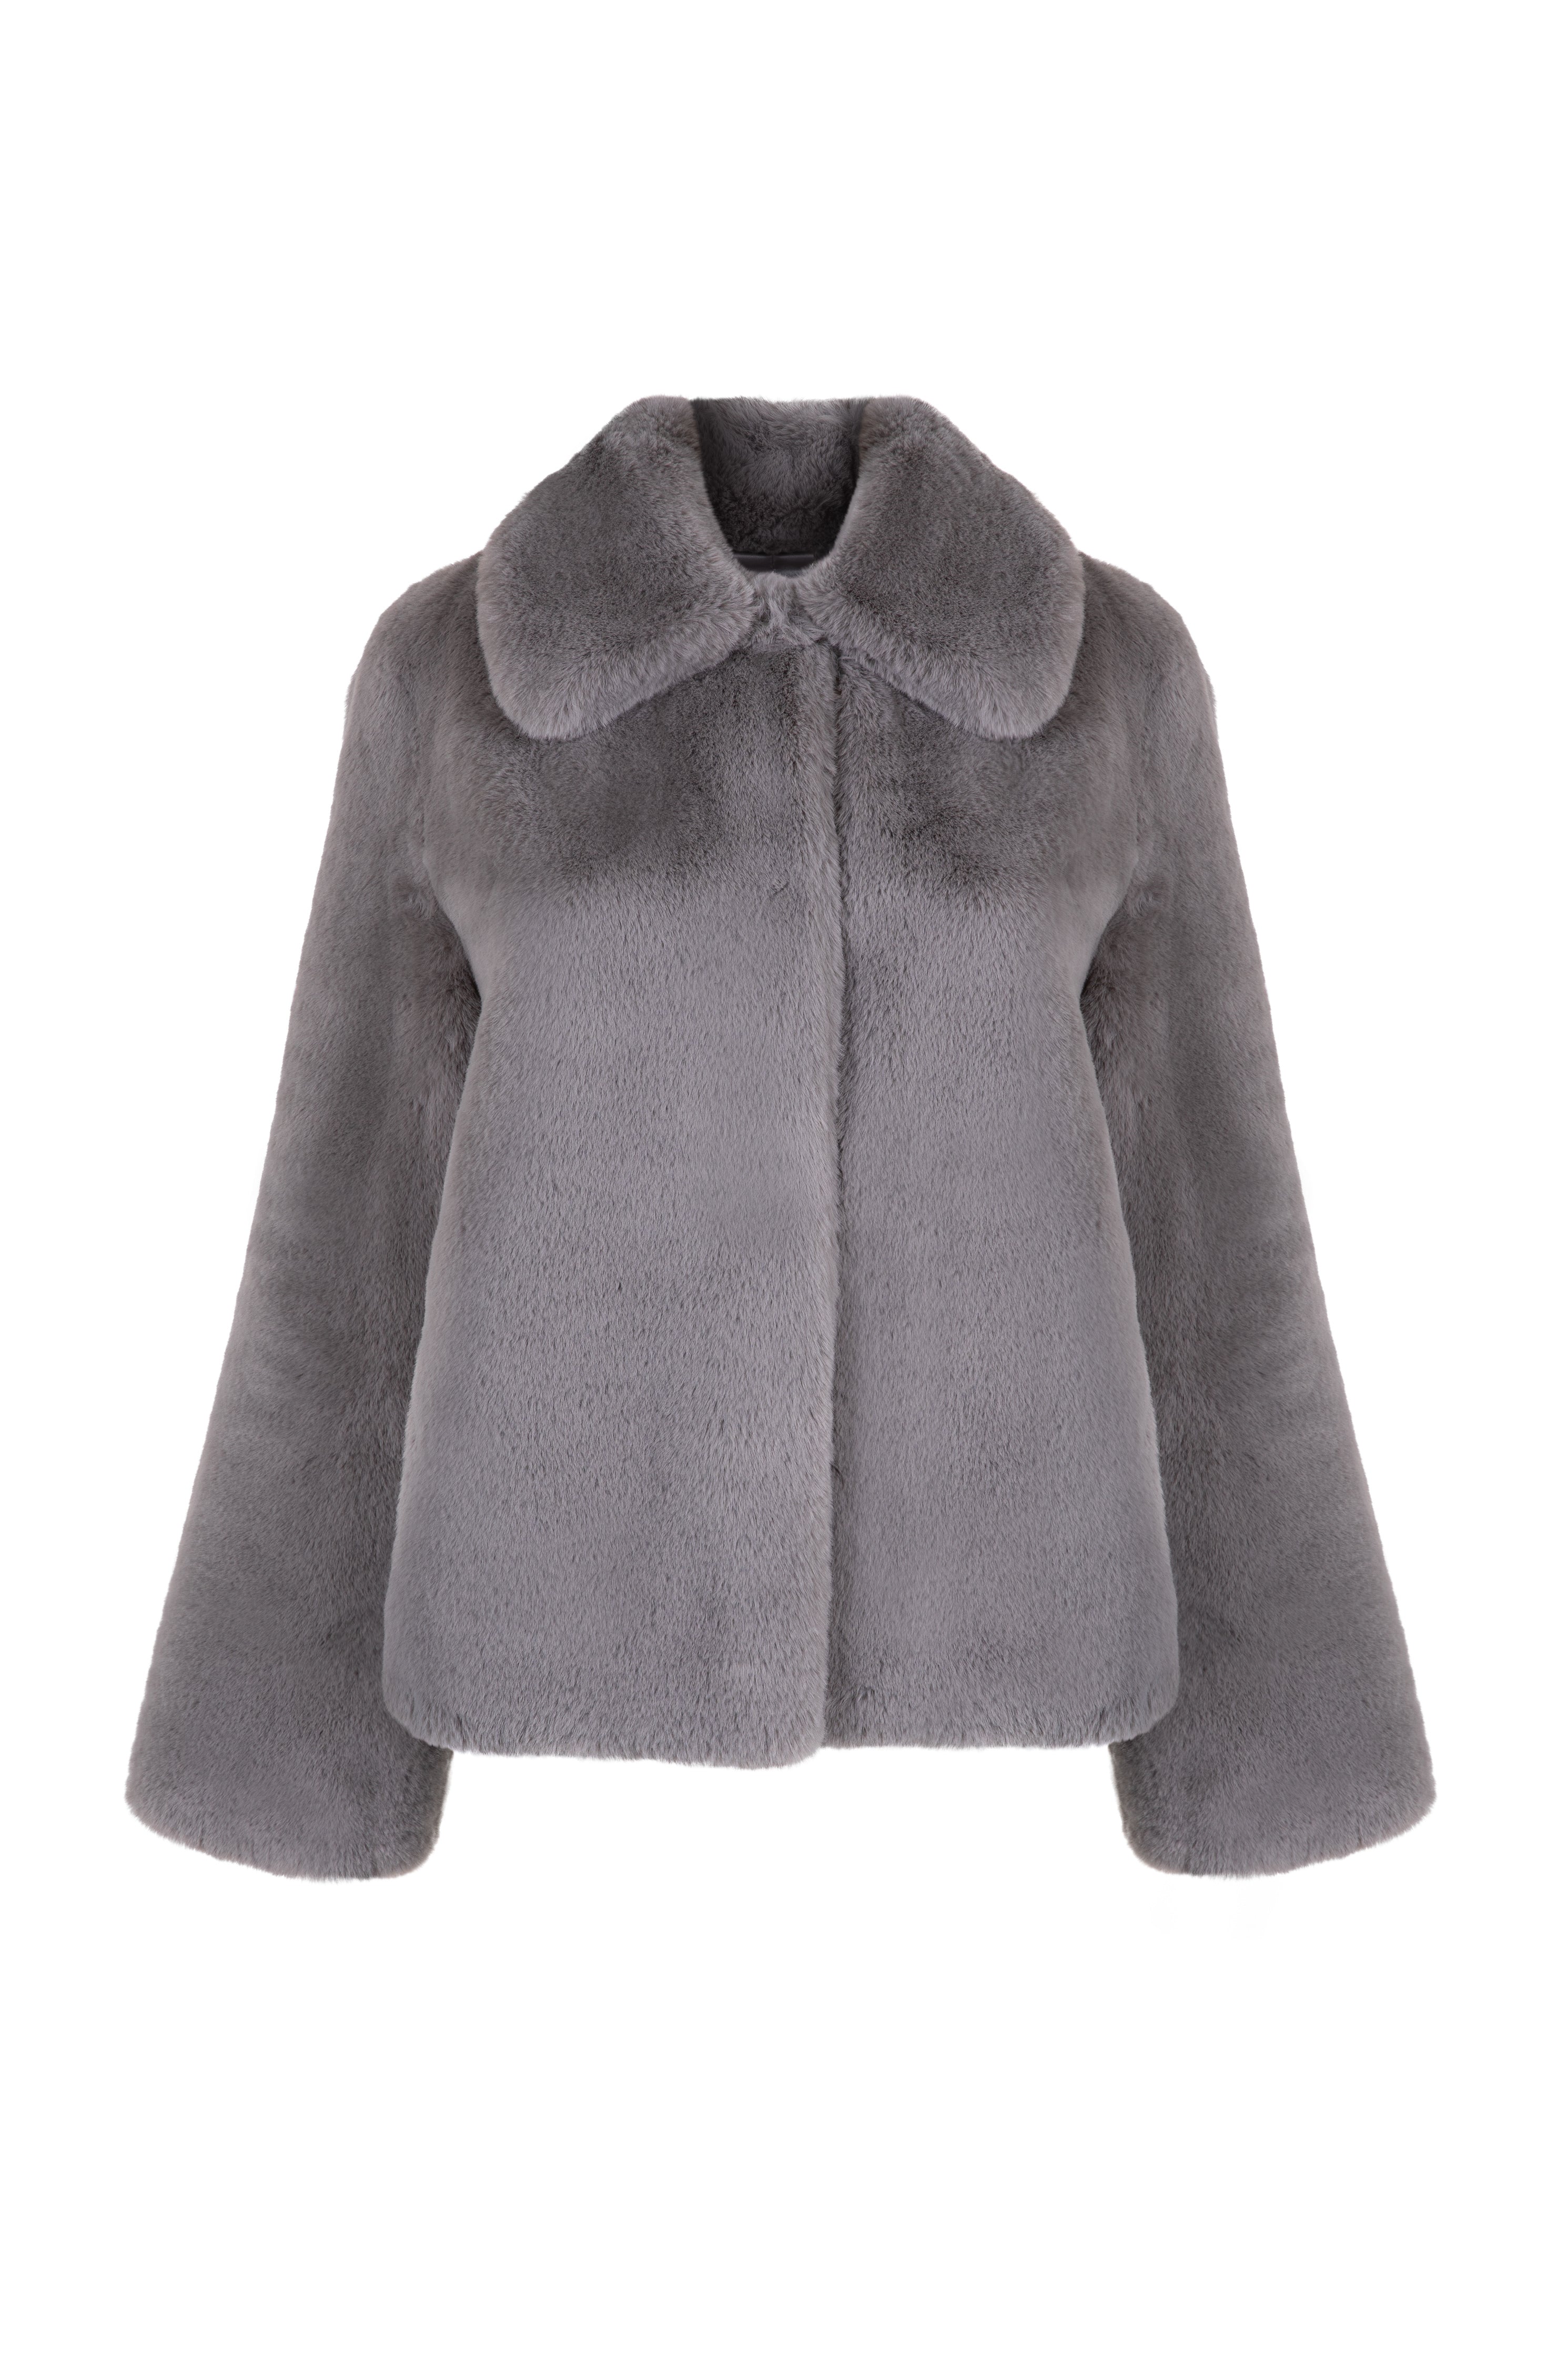 Christie Luxe Faux Fur Collar Jacket Grey, ISSY LONDON